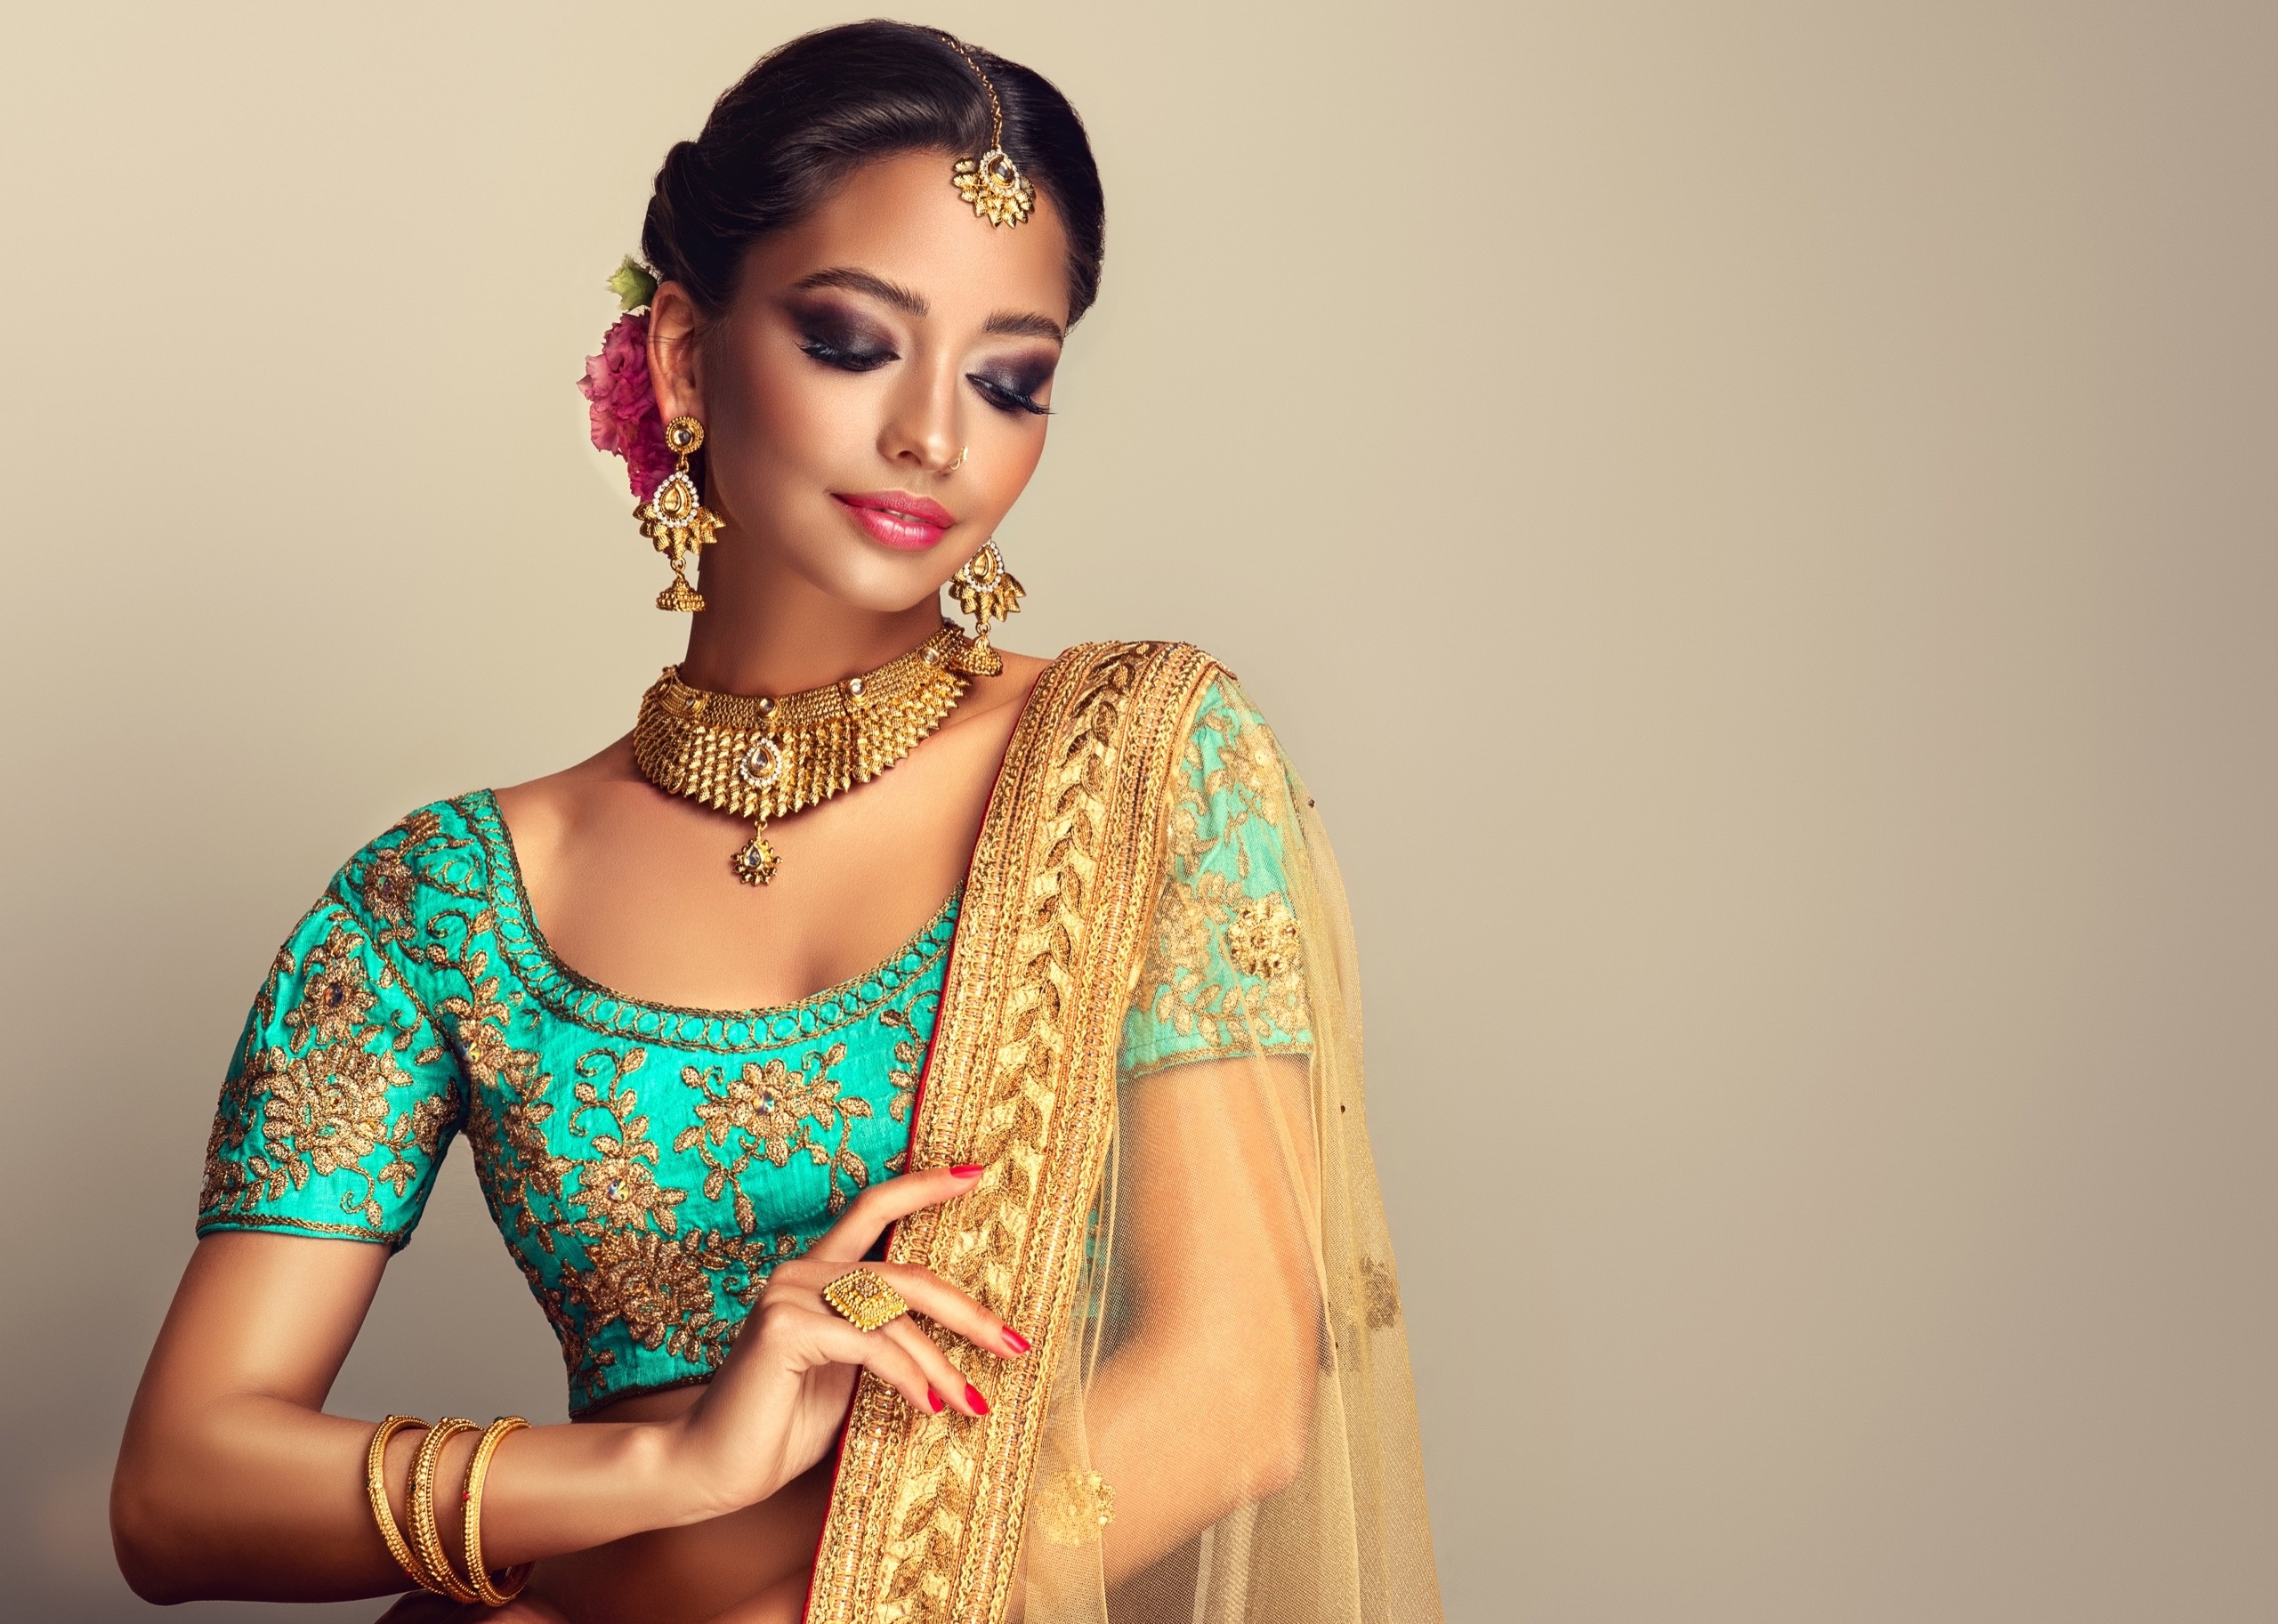 Women Glamour Eyeshadow Gold Indian 2560x1825